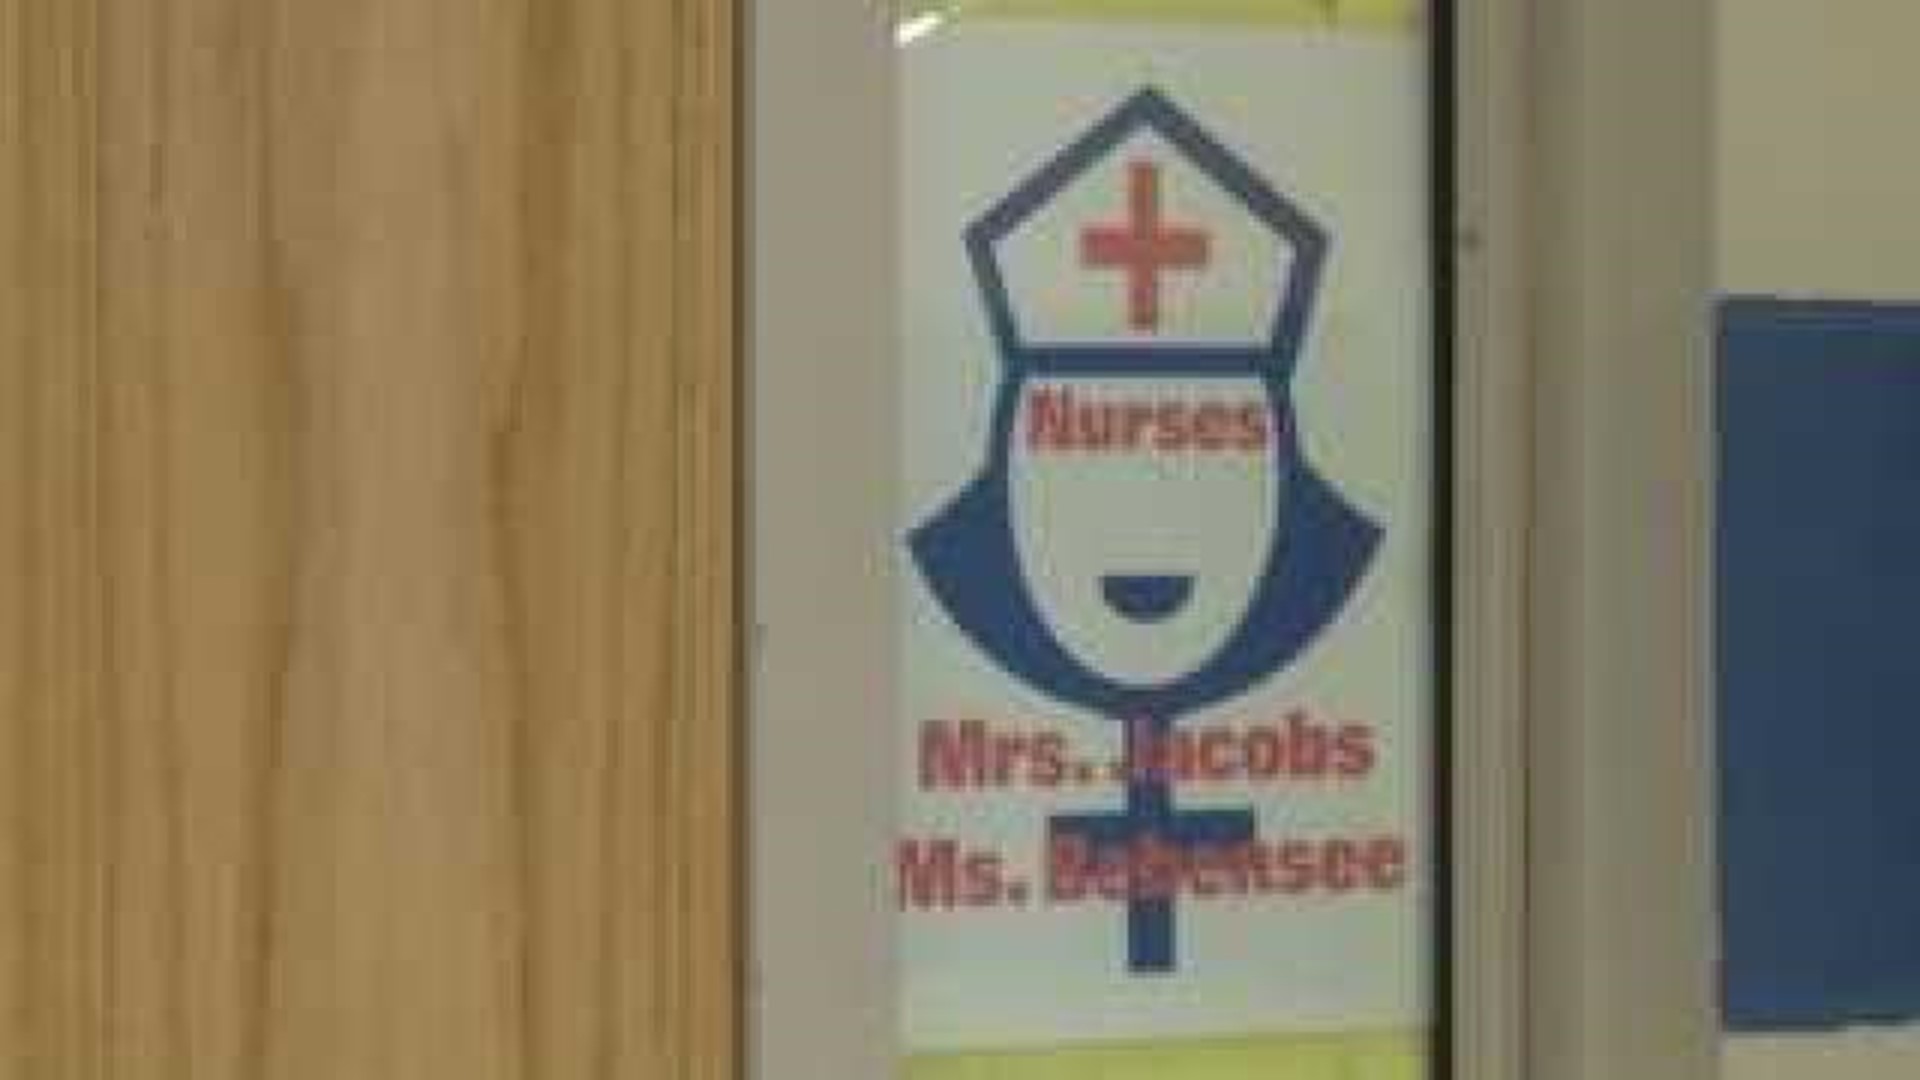 School nurse requirements to change in Illinois